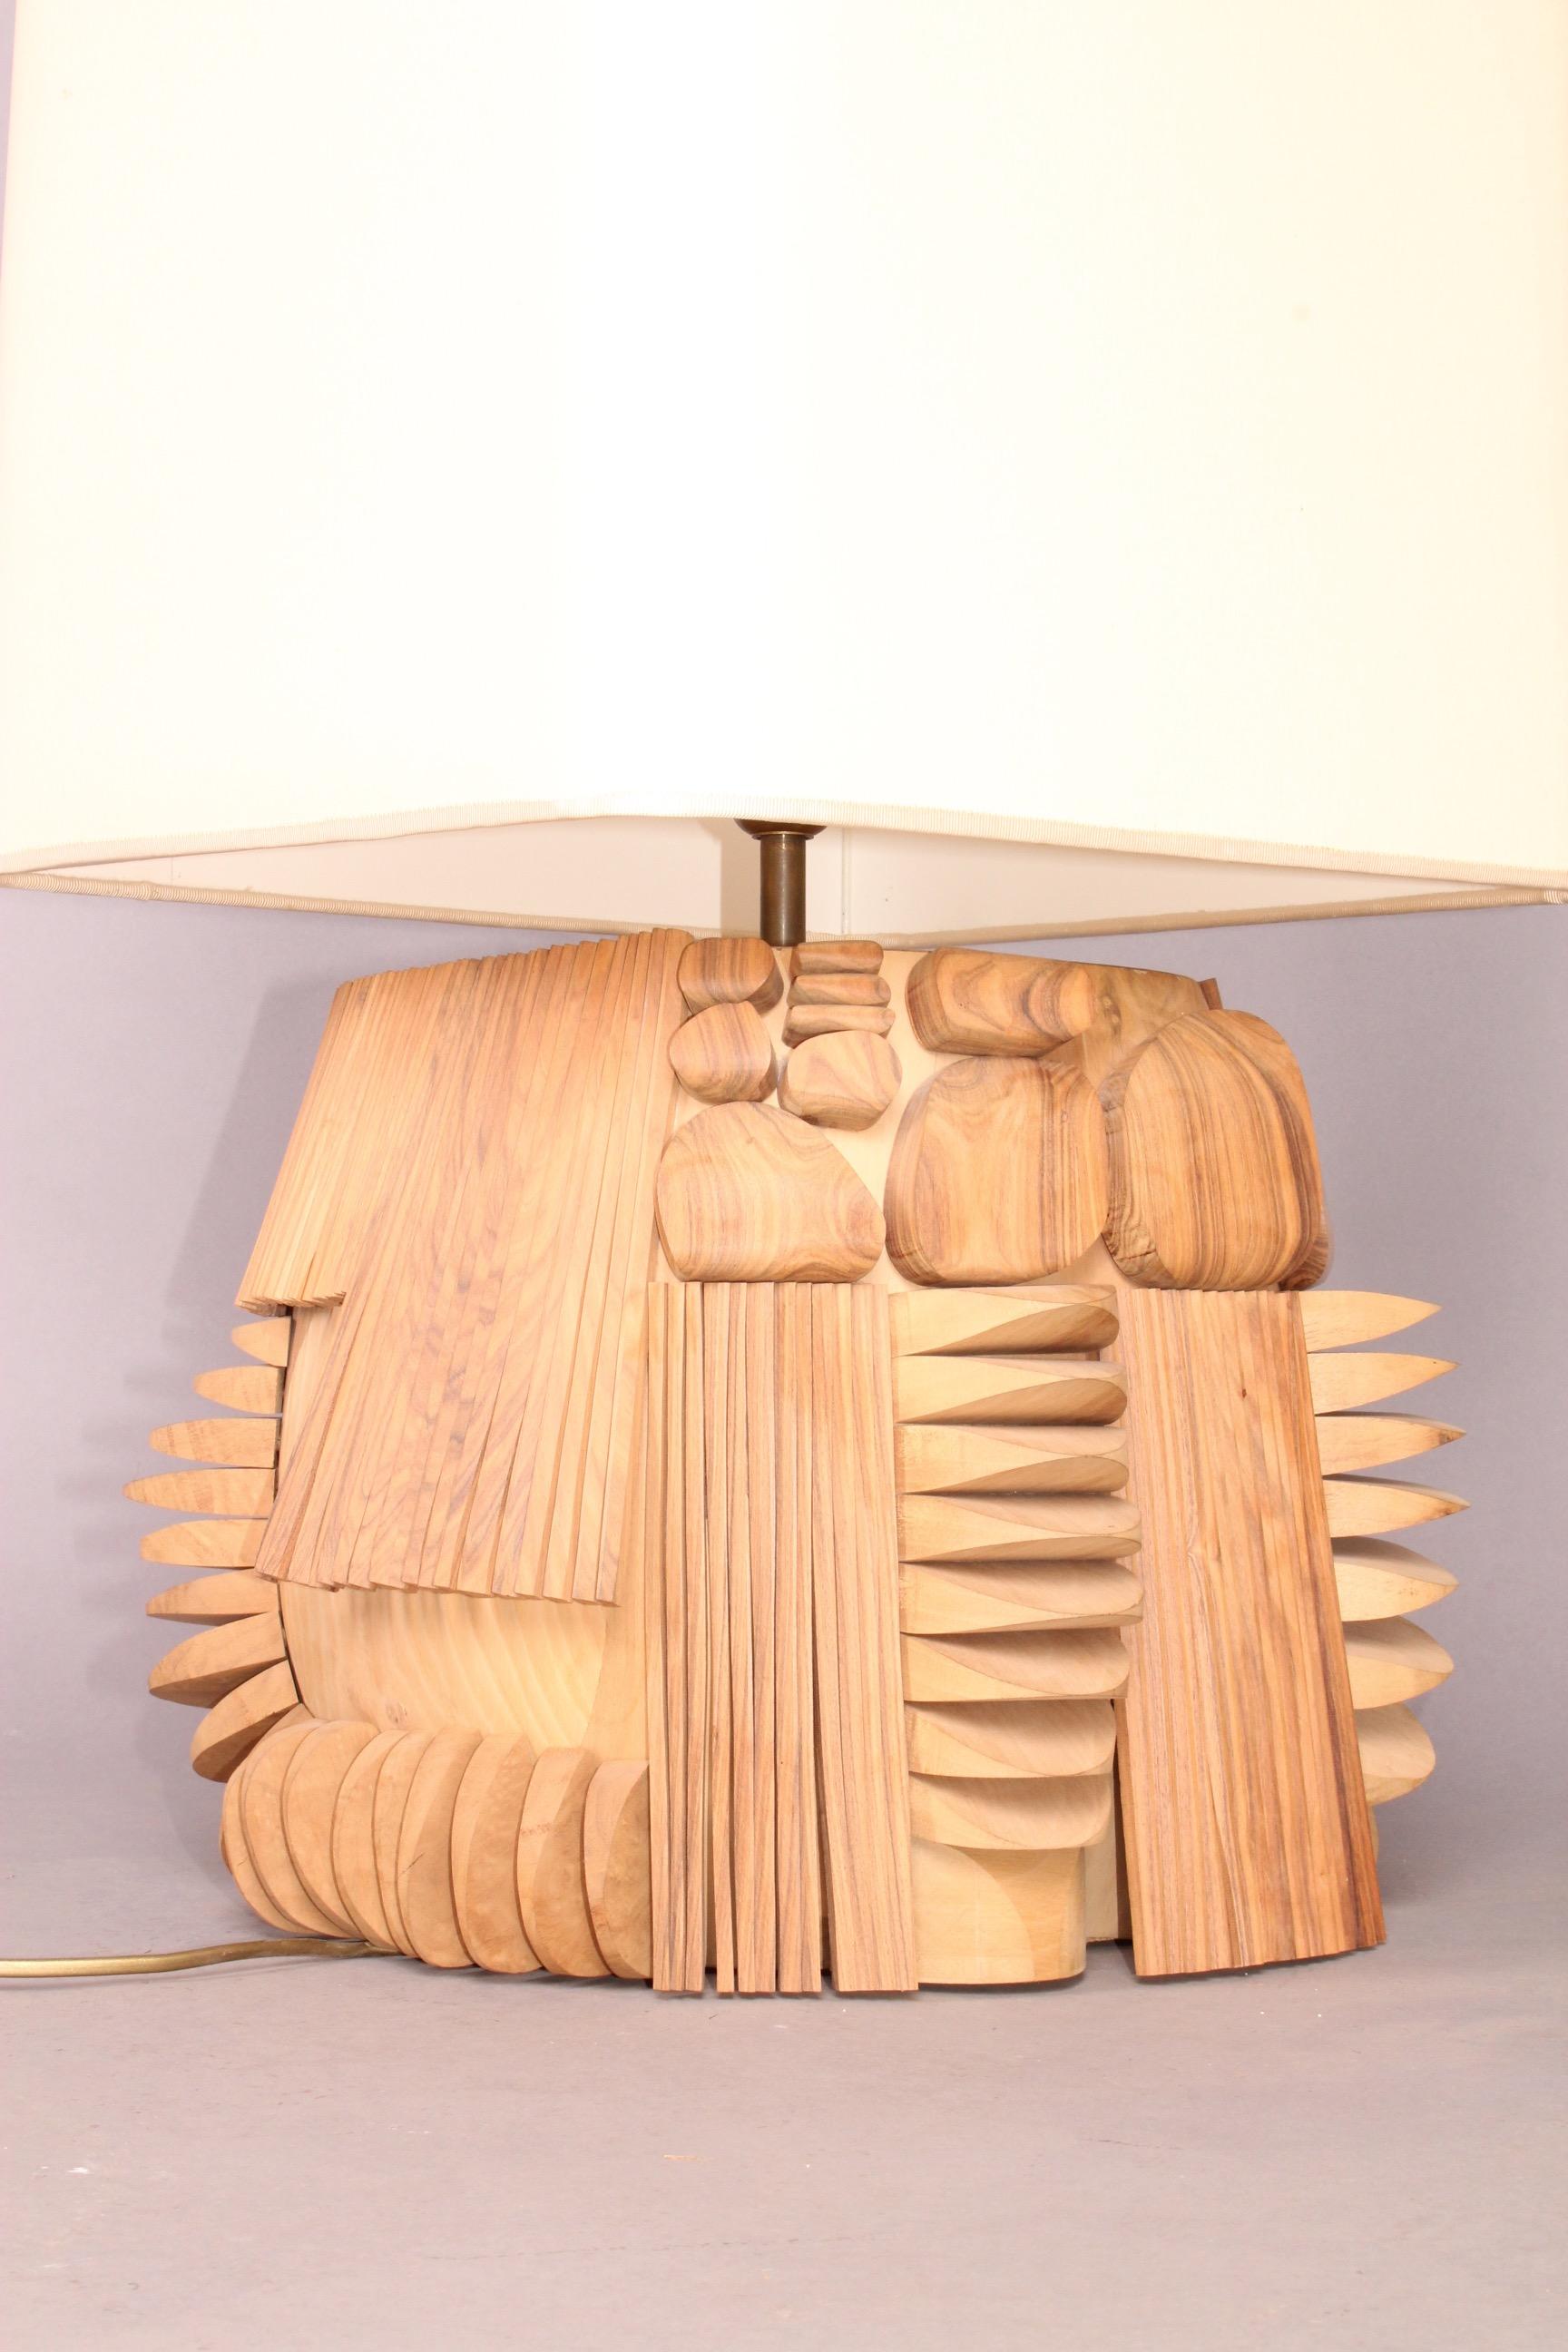 Big Wood Sculpture Table Lamp 2